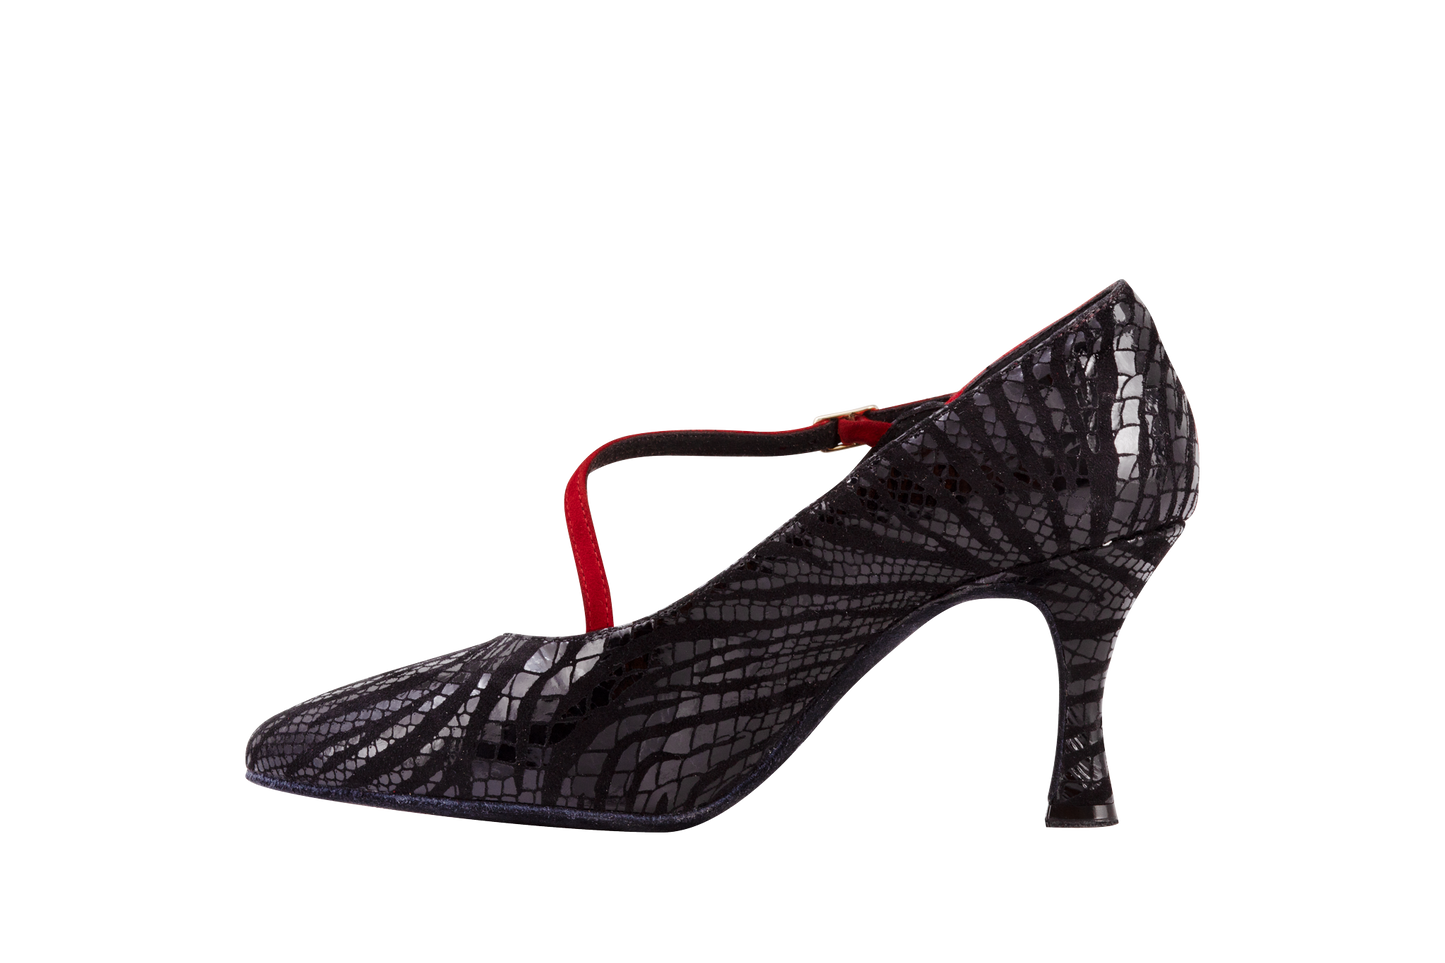 Dance Naturals 91 Zenda Ladies Red Suede/Black Printed Ballroom Dance Shoe with Diagonal Strap